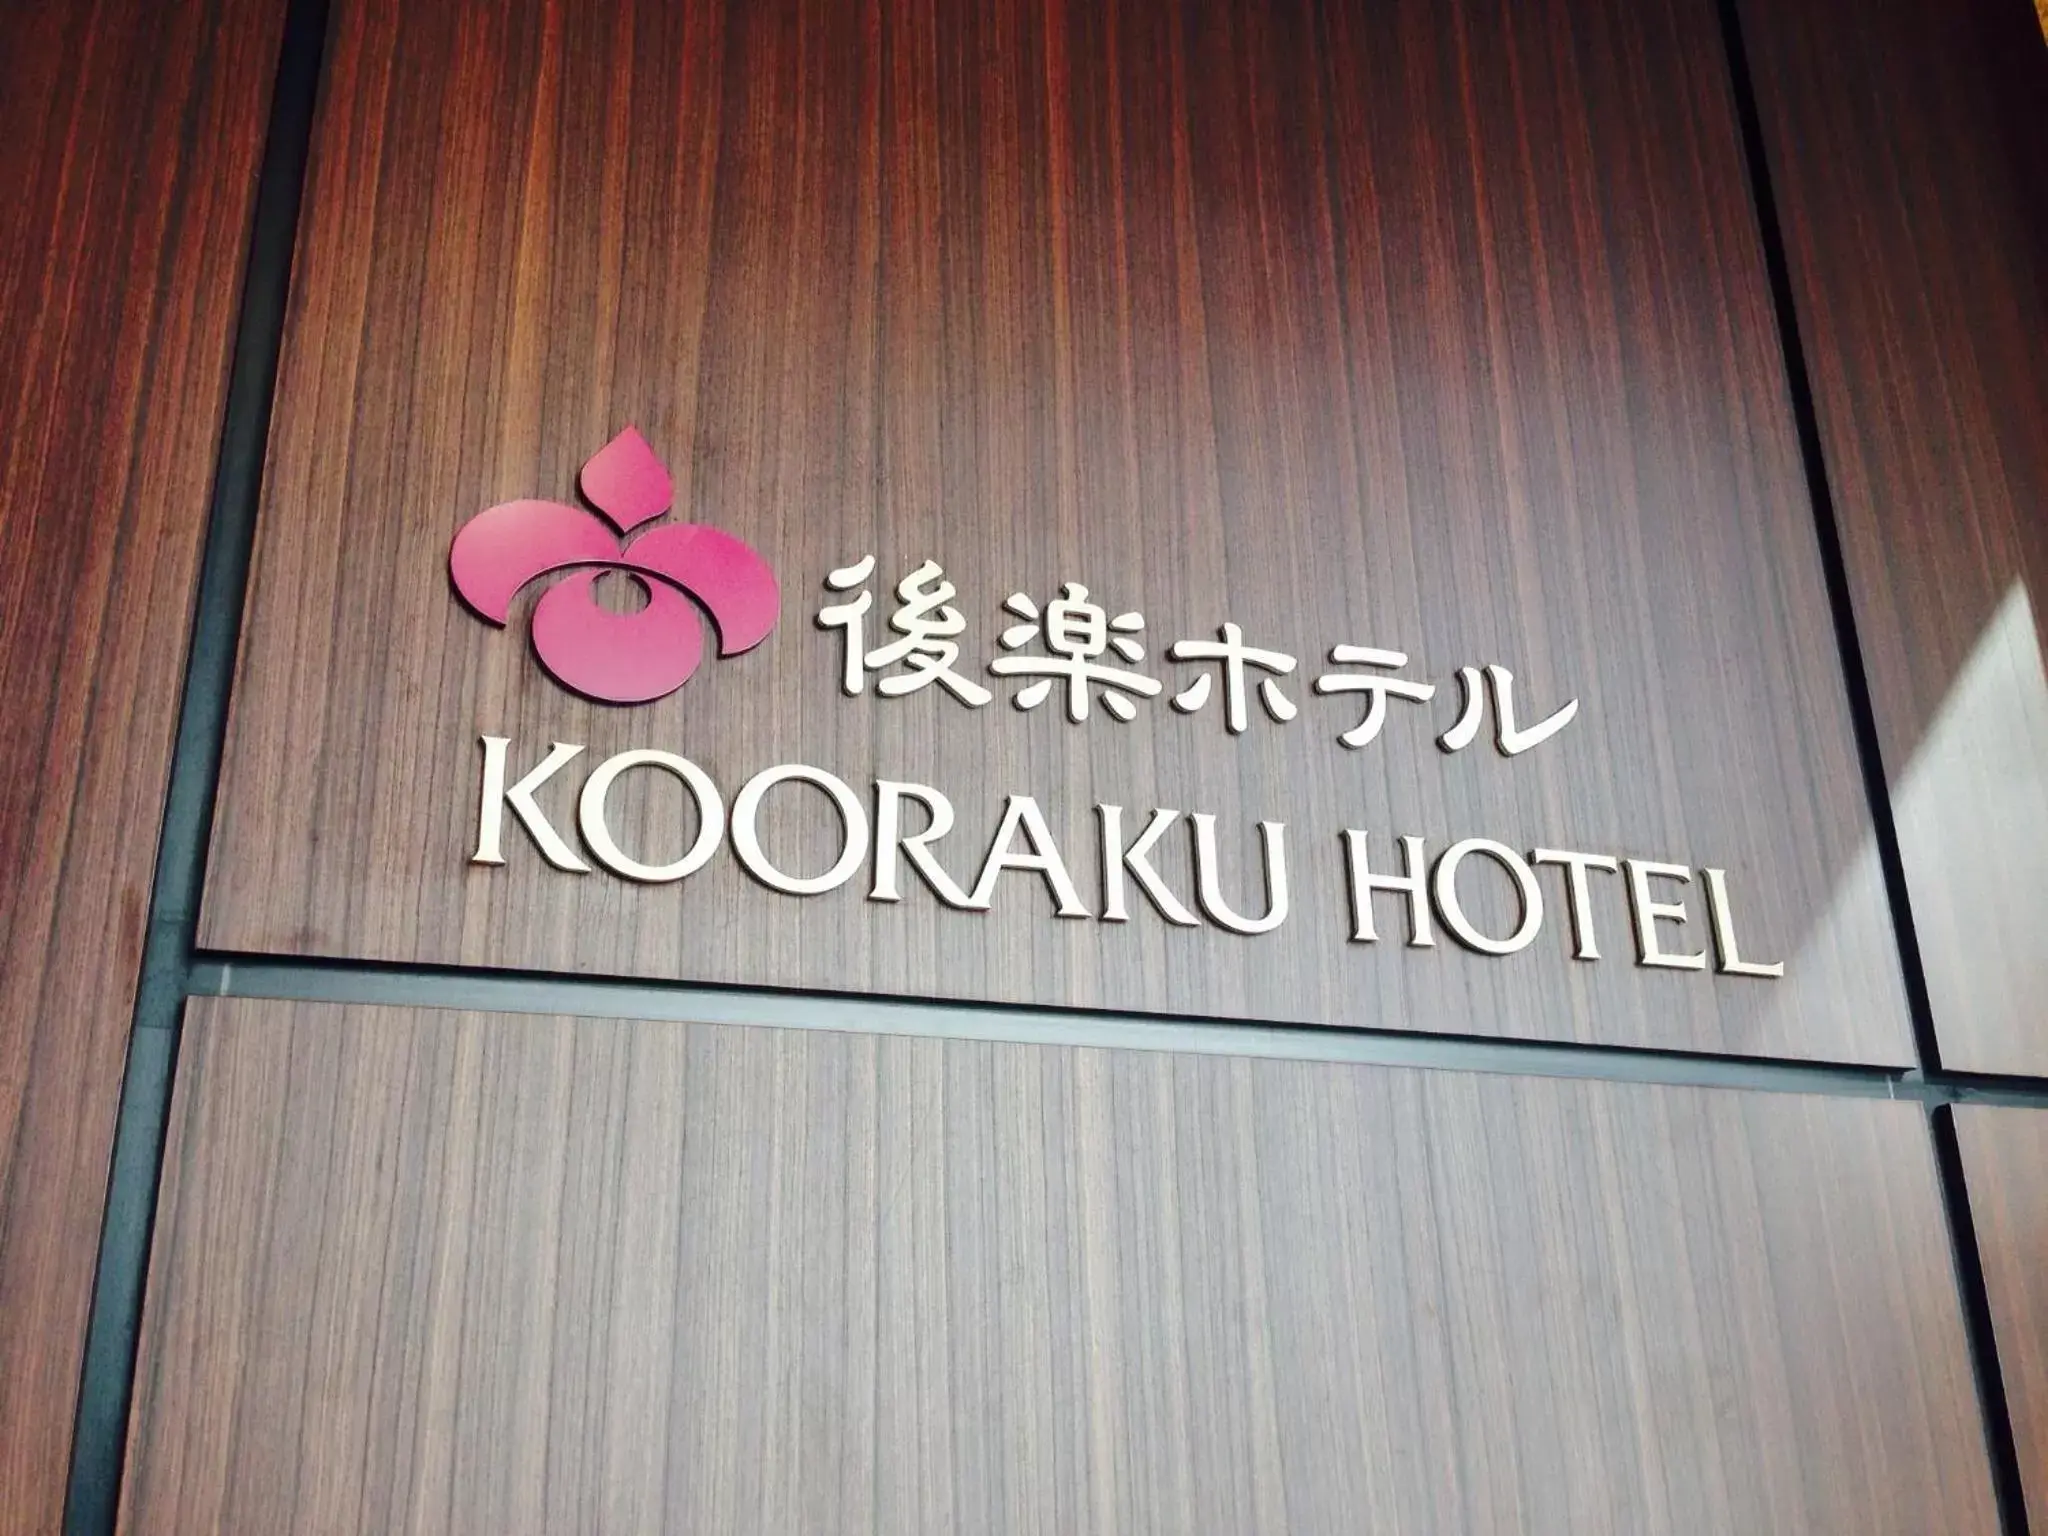 Facade/entrance in Okayama Koraku Hotel